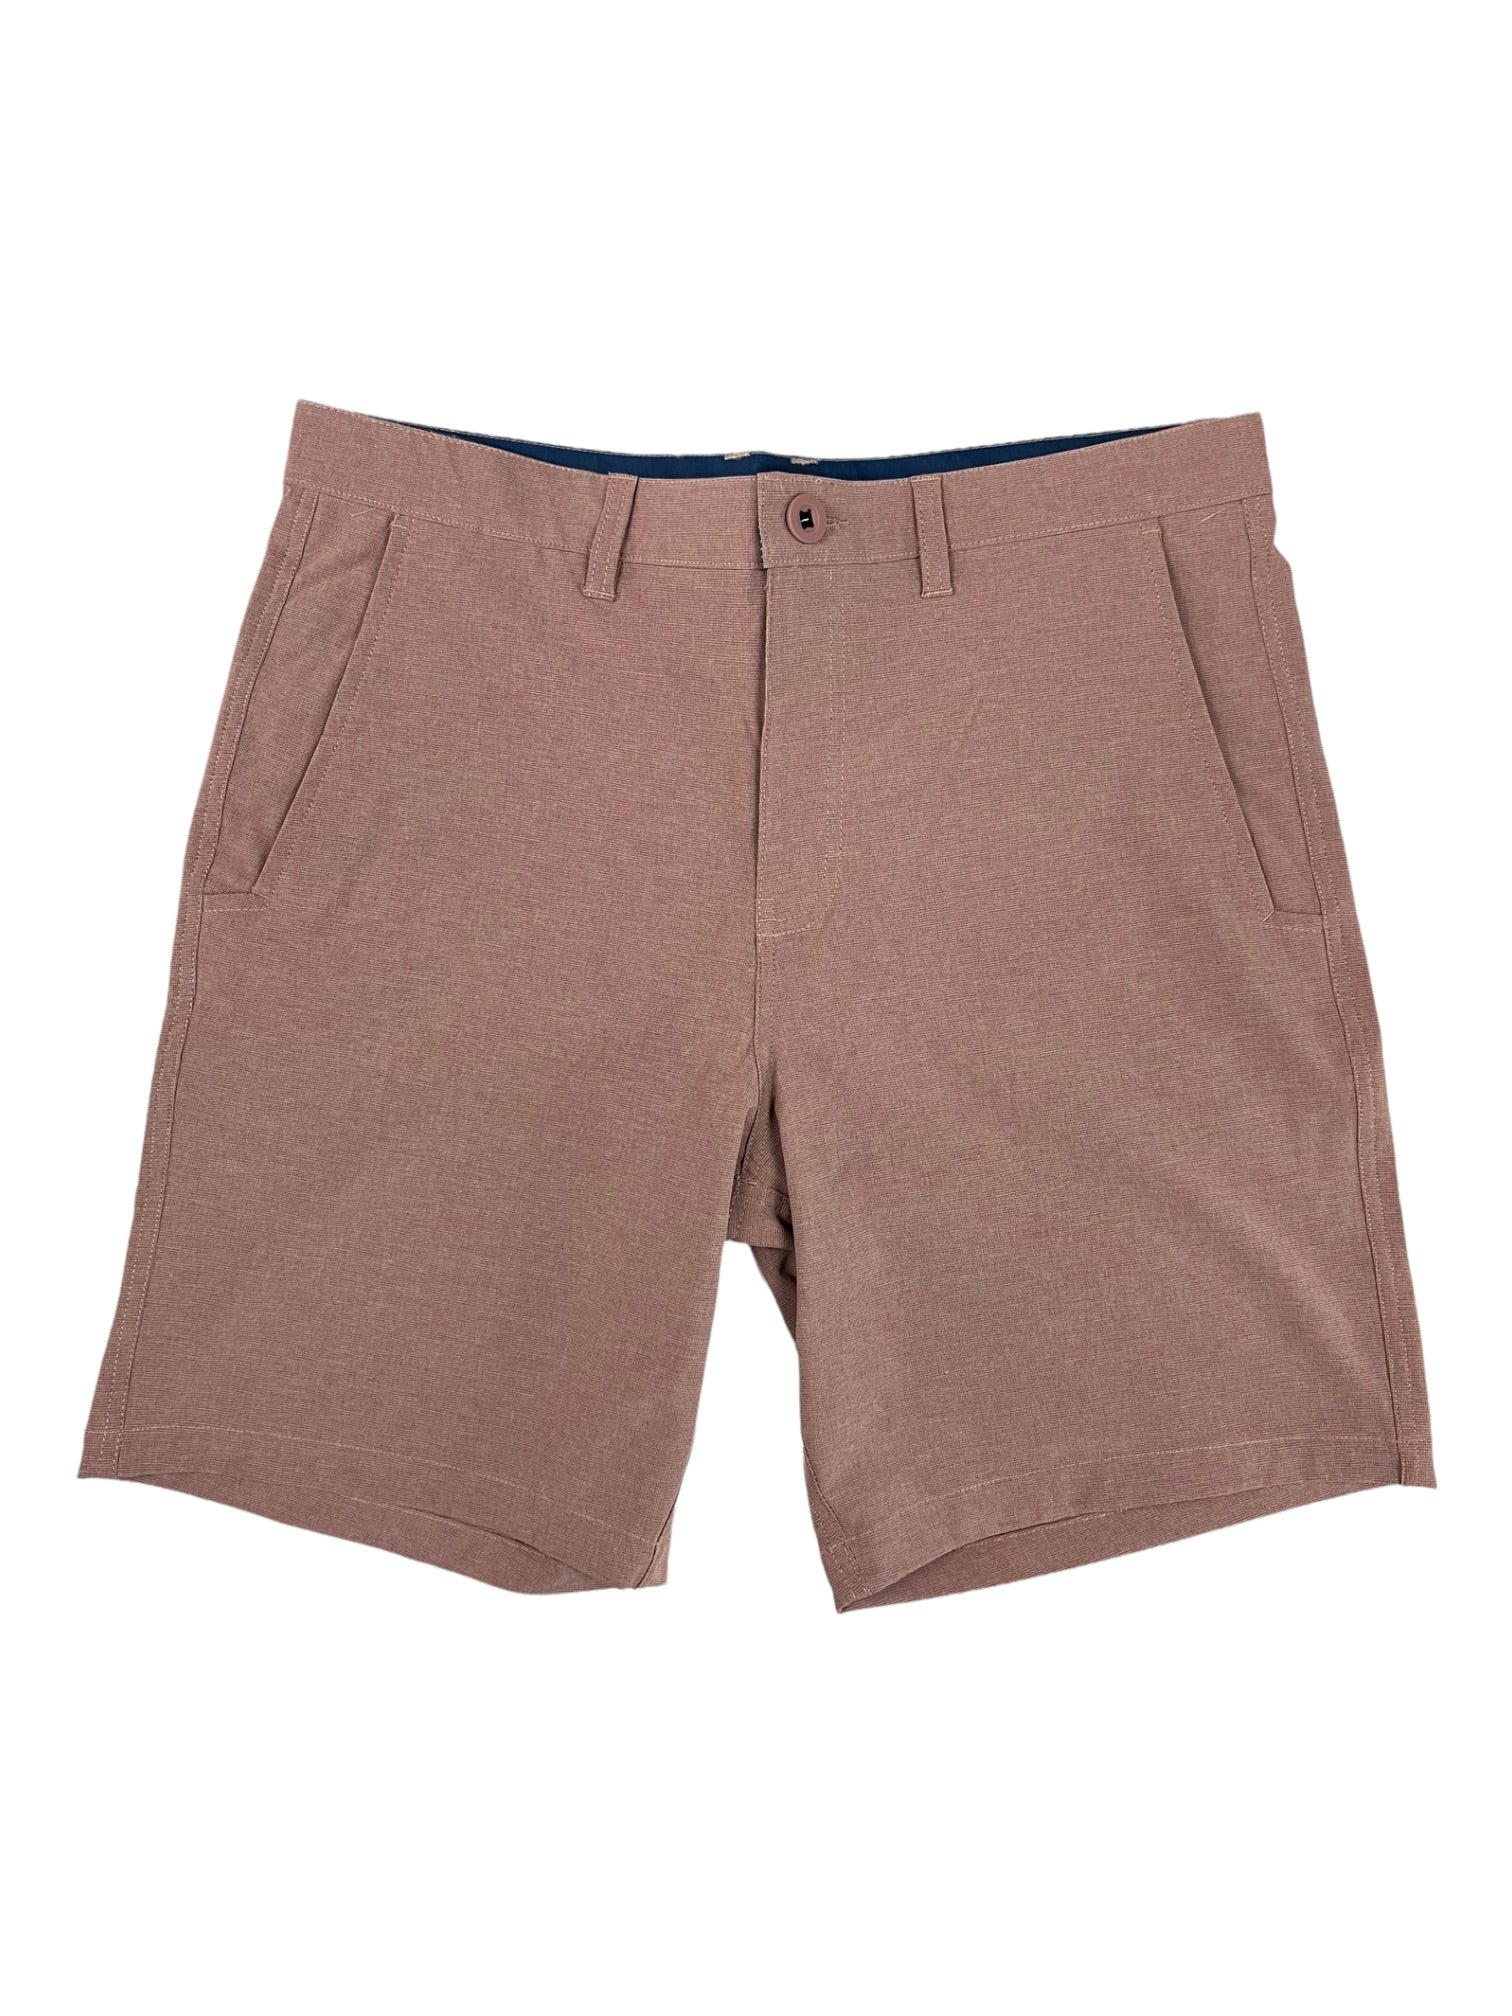 Harbor Hybrid Shorts - Brick